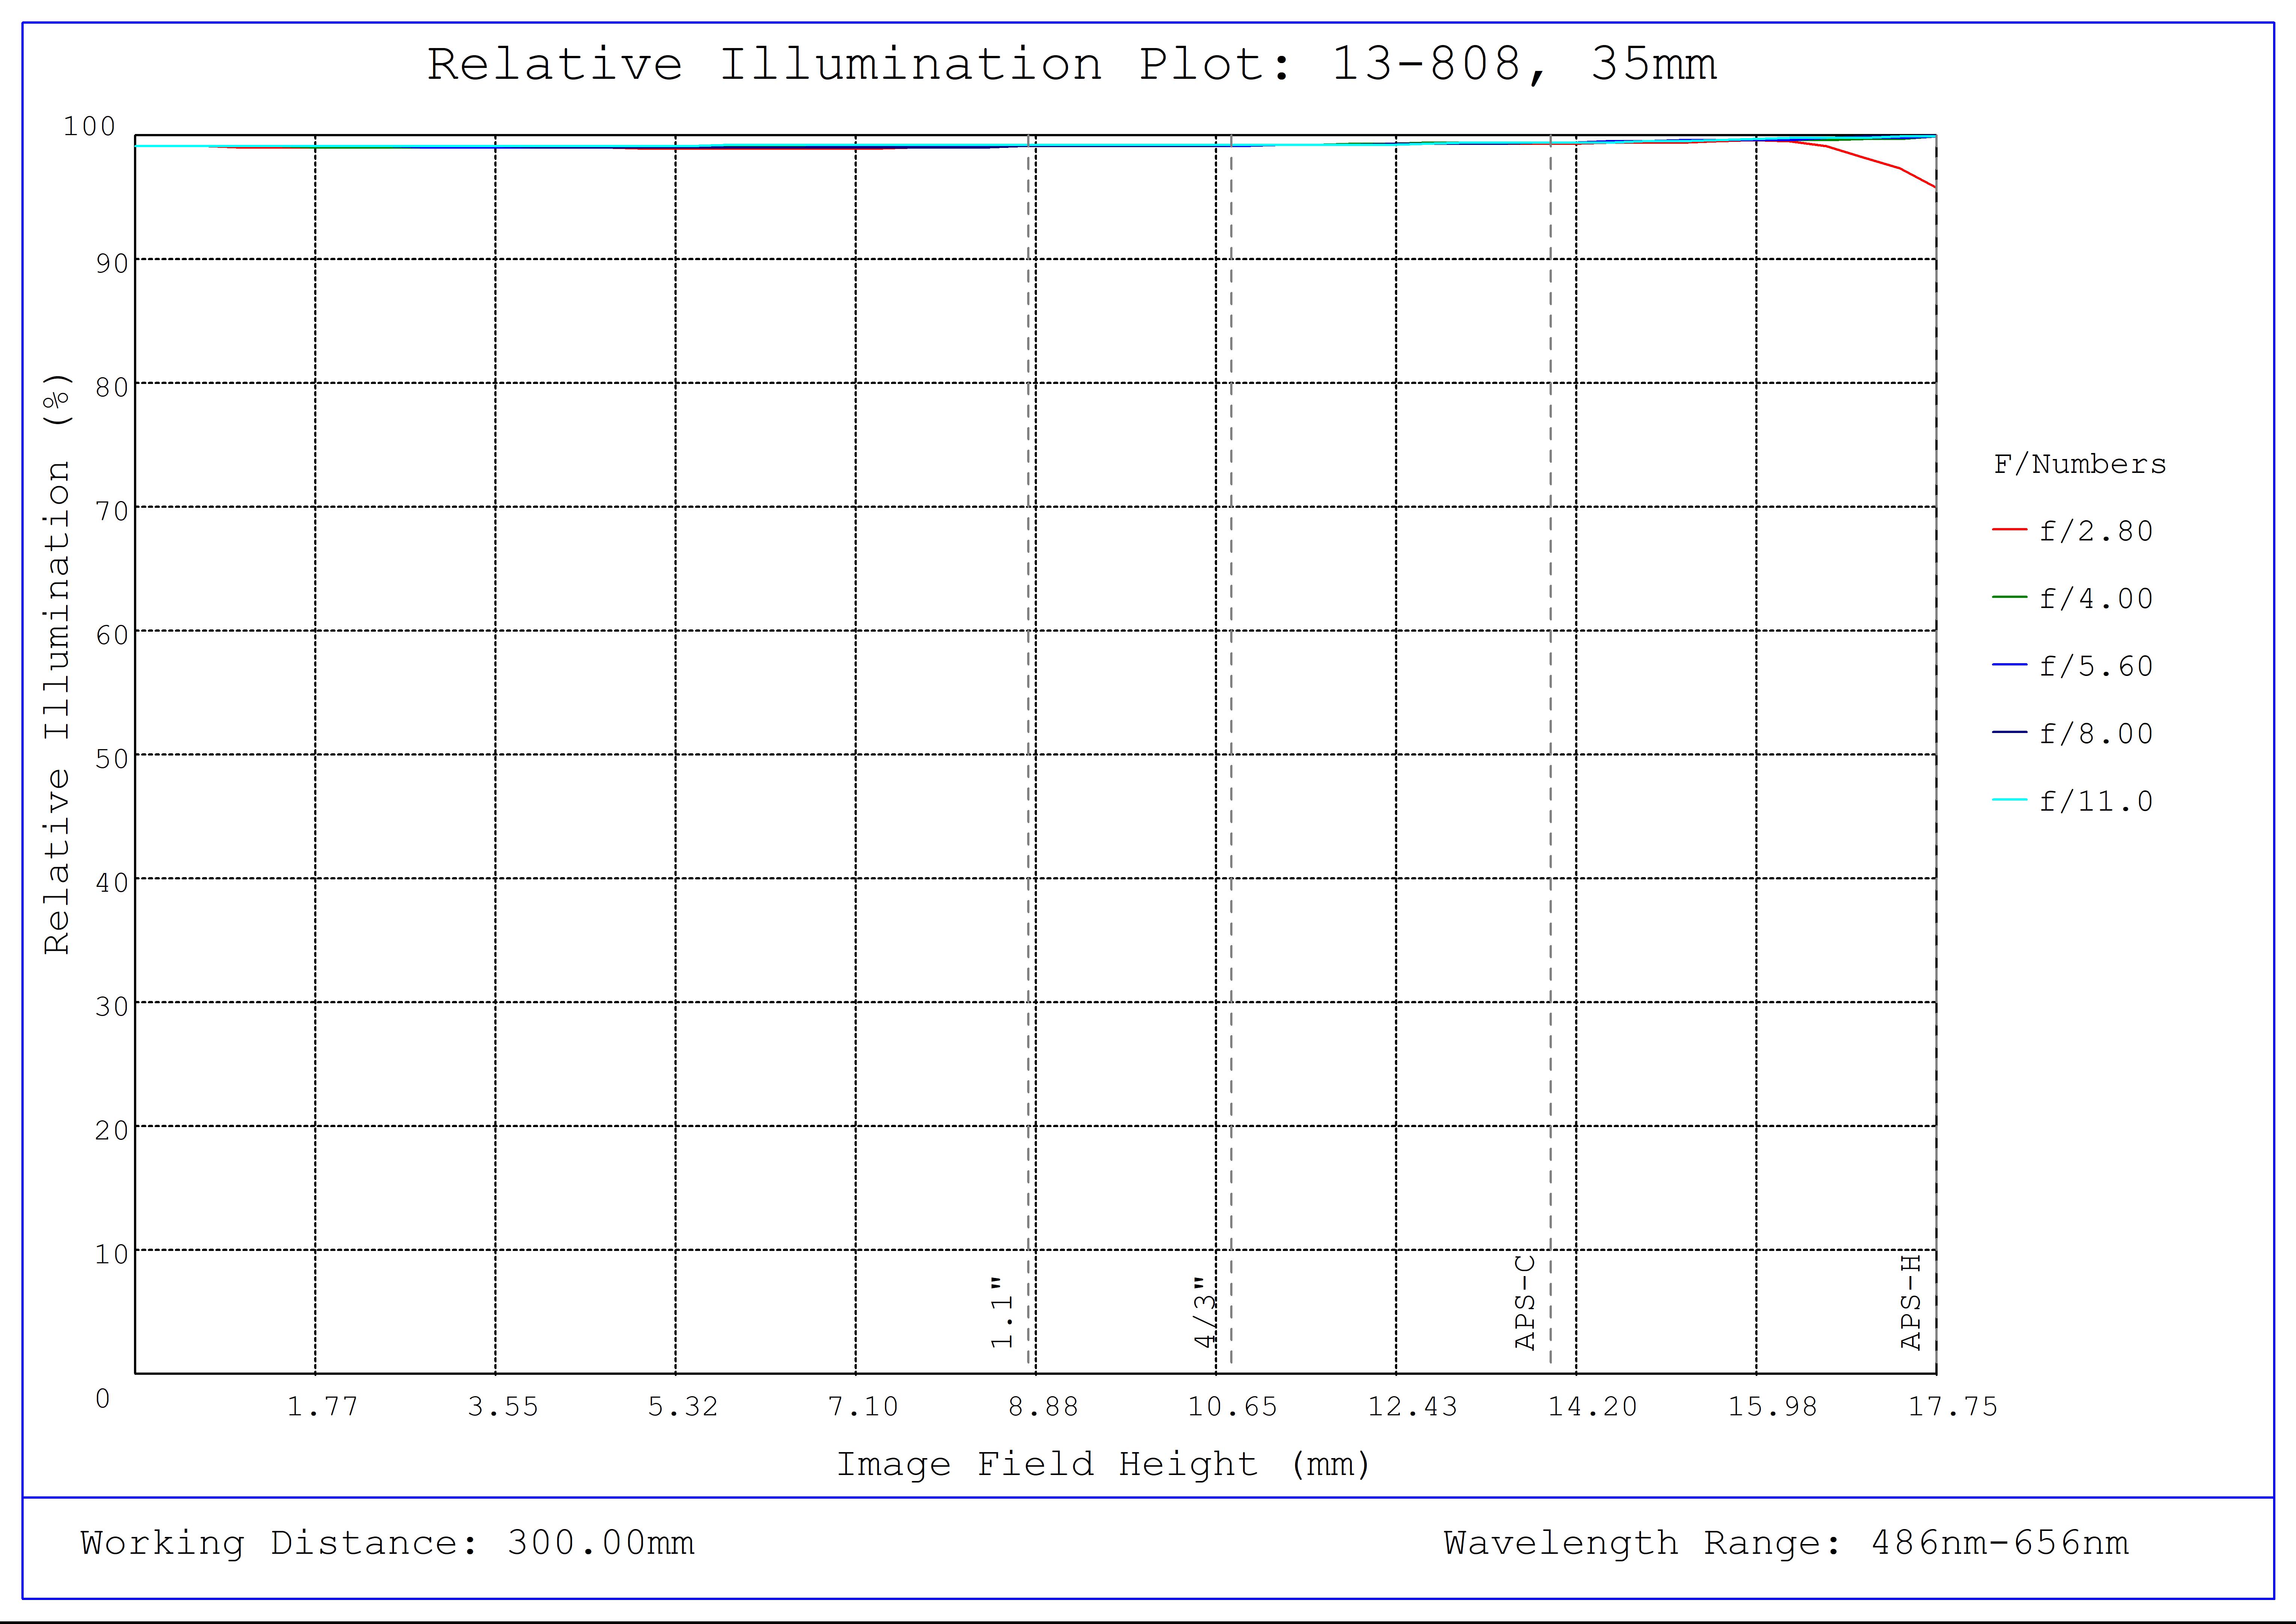 #13-808, 35mm F-Mount LH Series Fixed Focal Length Lens, Relative Illumination Plot